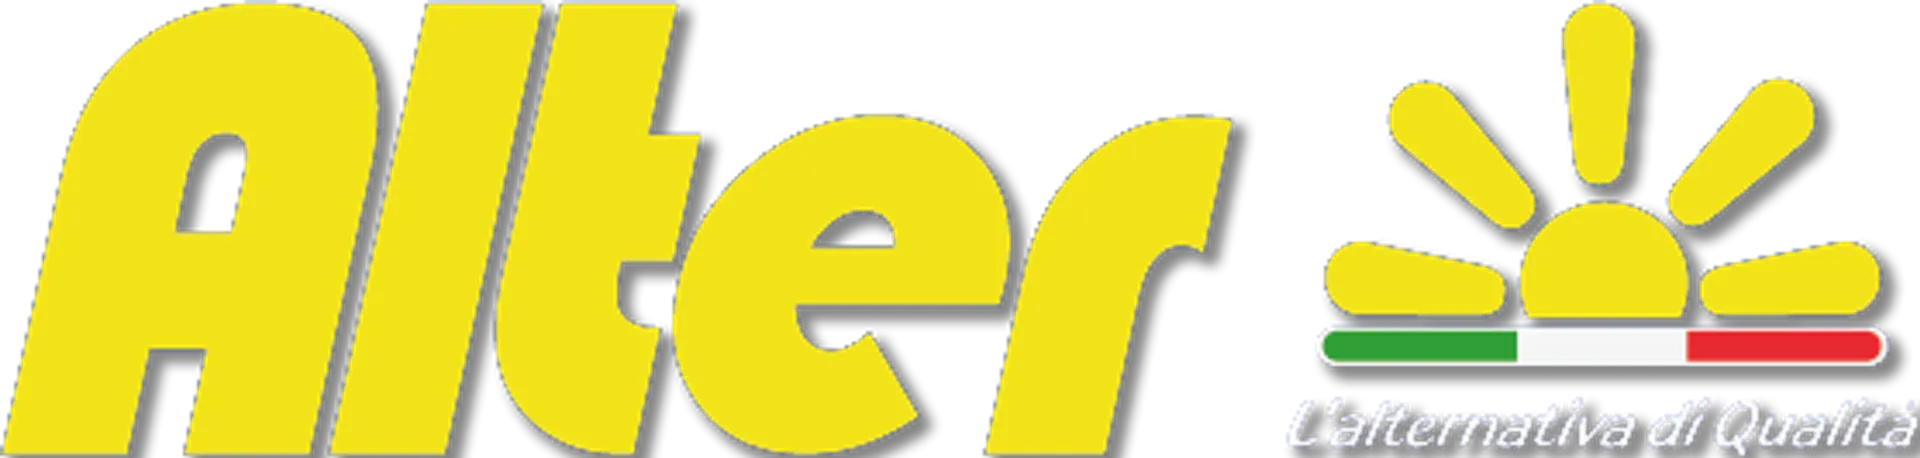 ALTER DISCOUNT logo